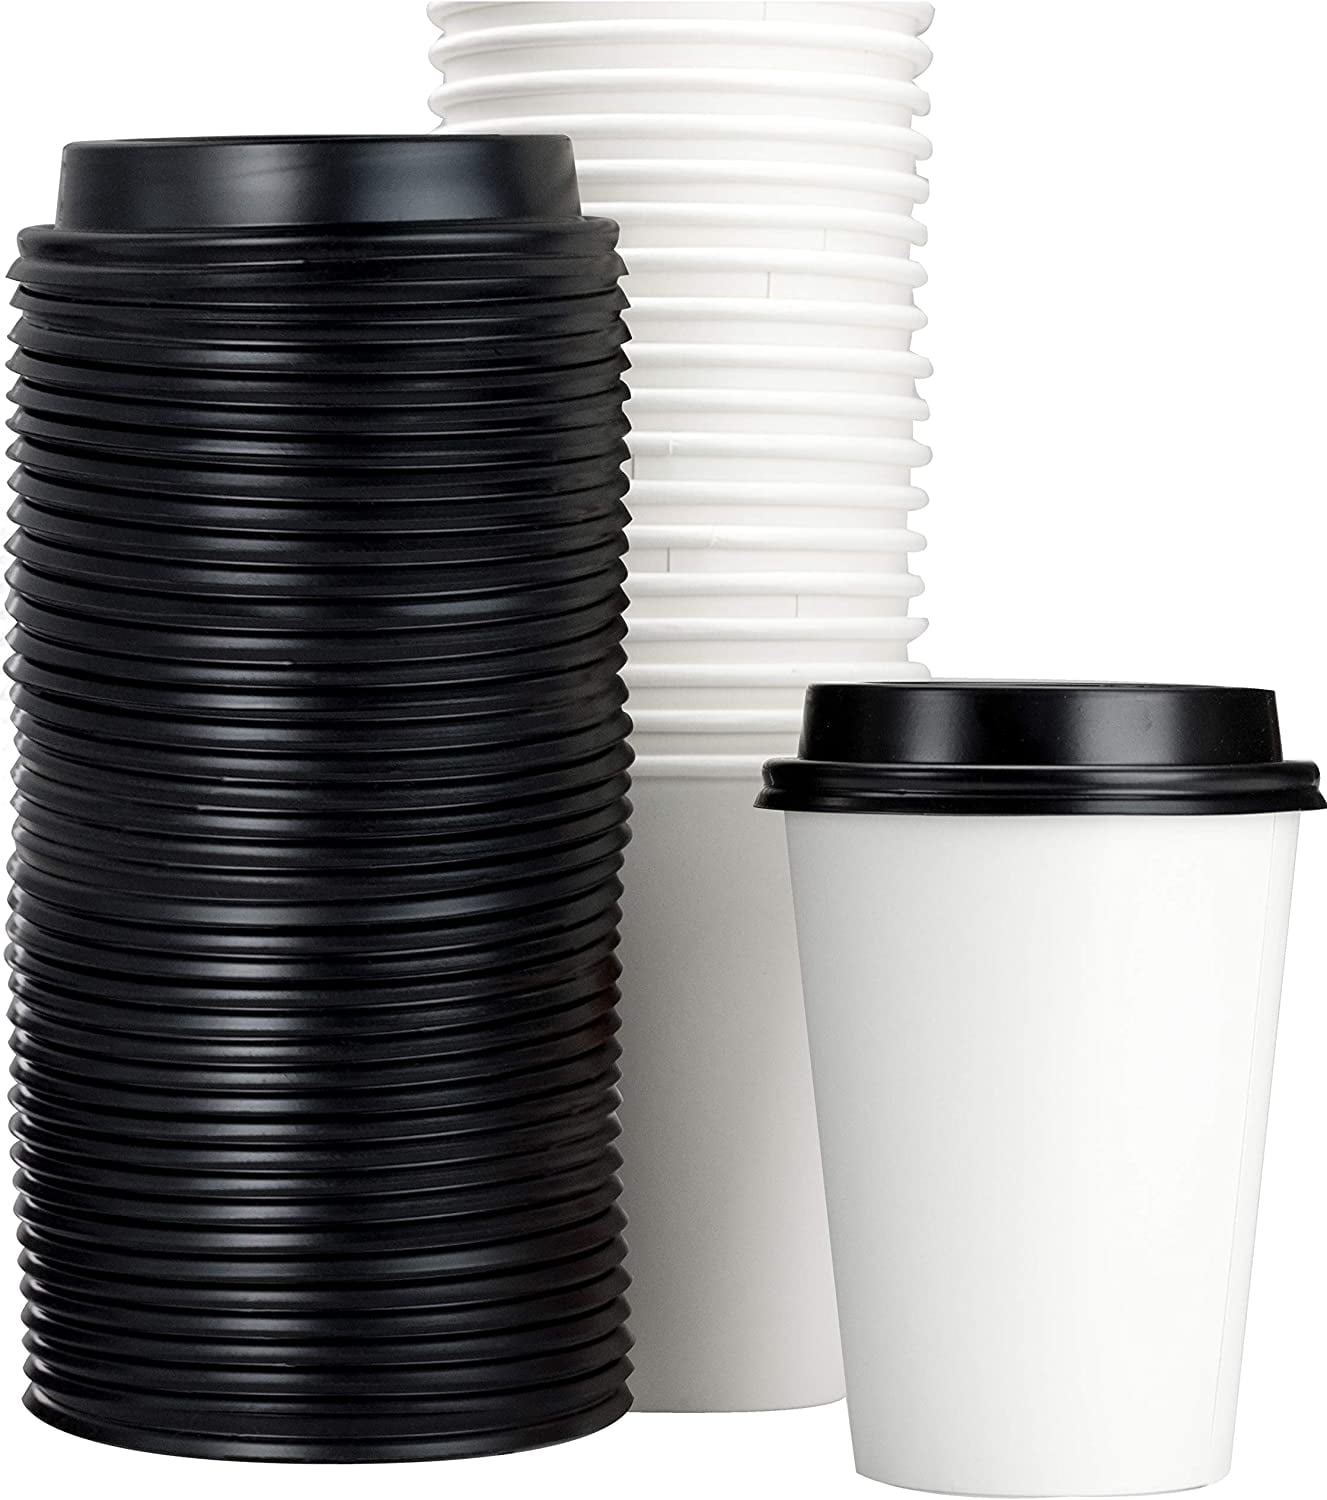 Avant Grub 12 oz. Orange Disposable Coffee Cup Set with Sleeves, Stirrer,  Lids 50Pk.